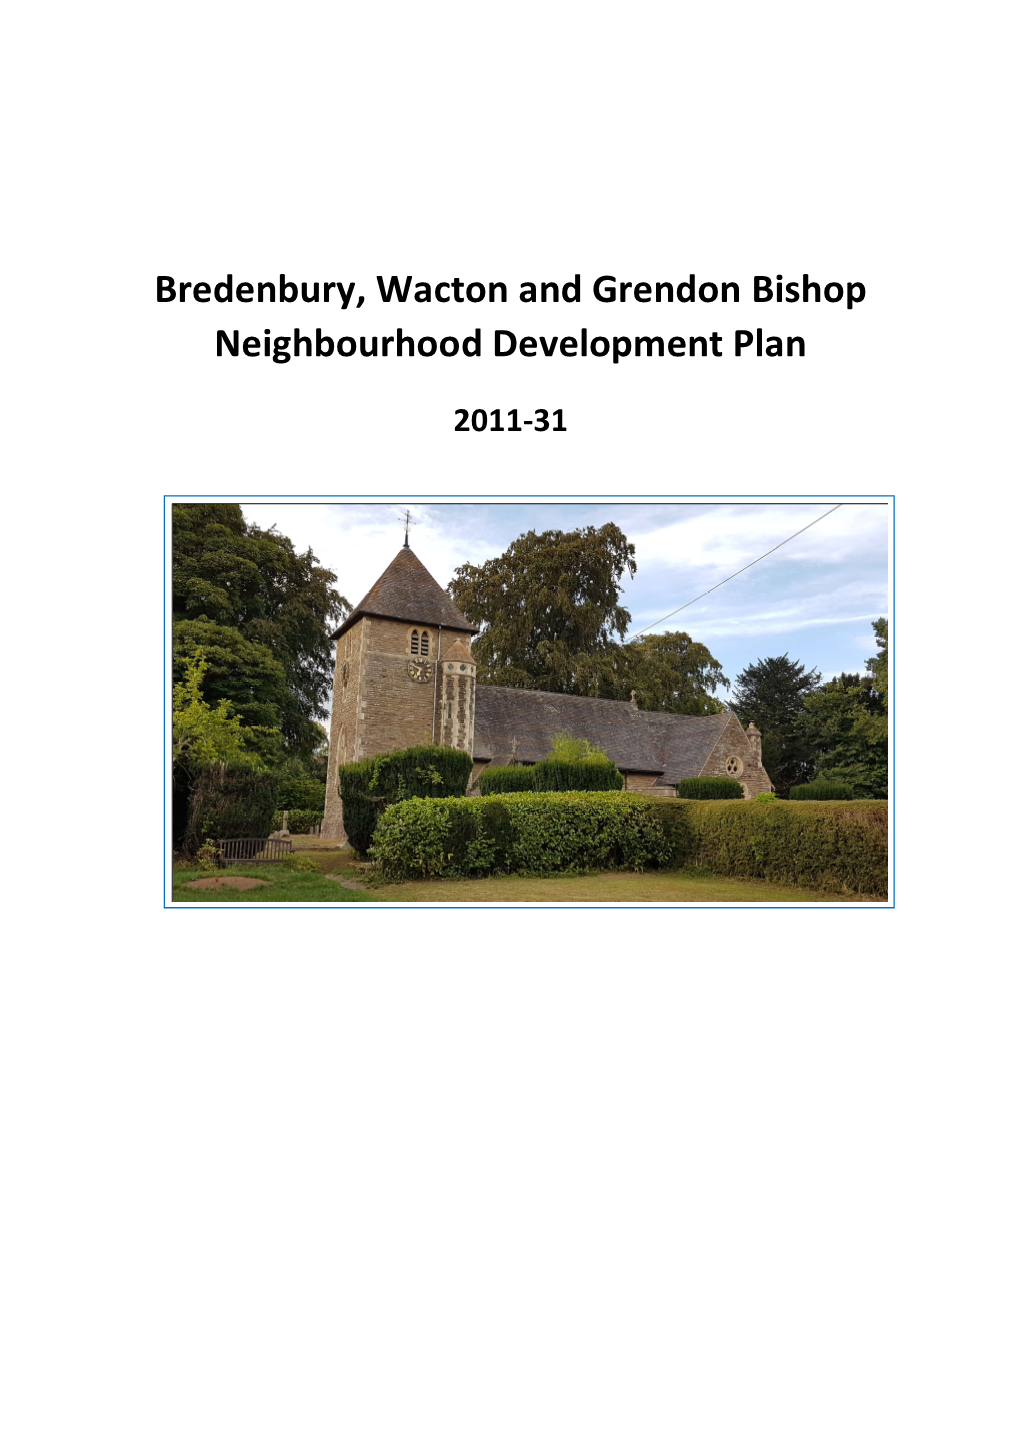 Bredenbury, Wacton and Grendon Bishop Neighbourhood Development Plan